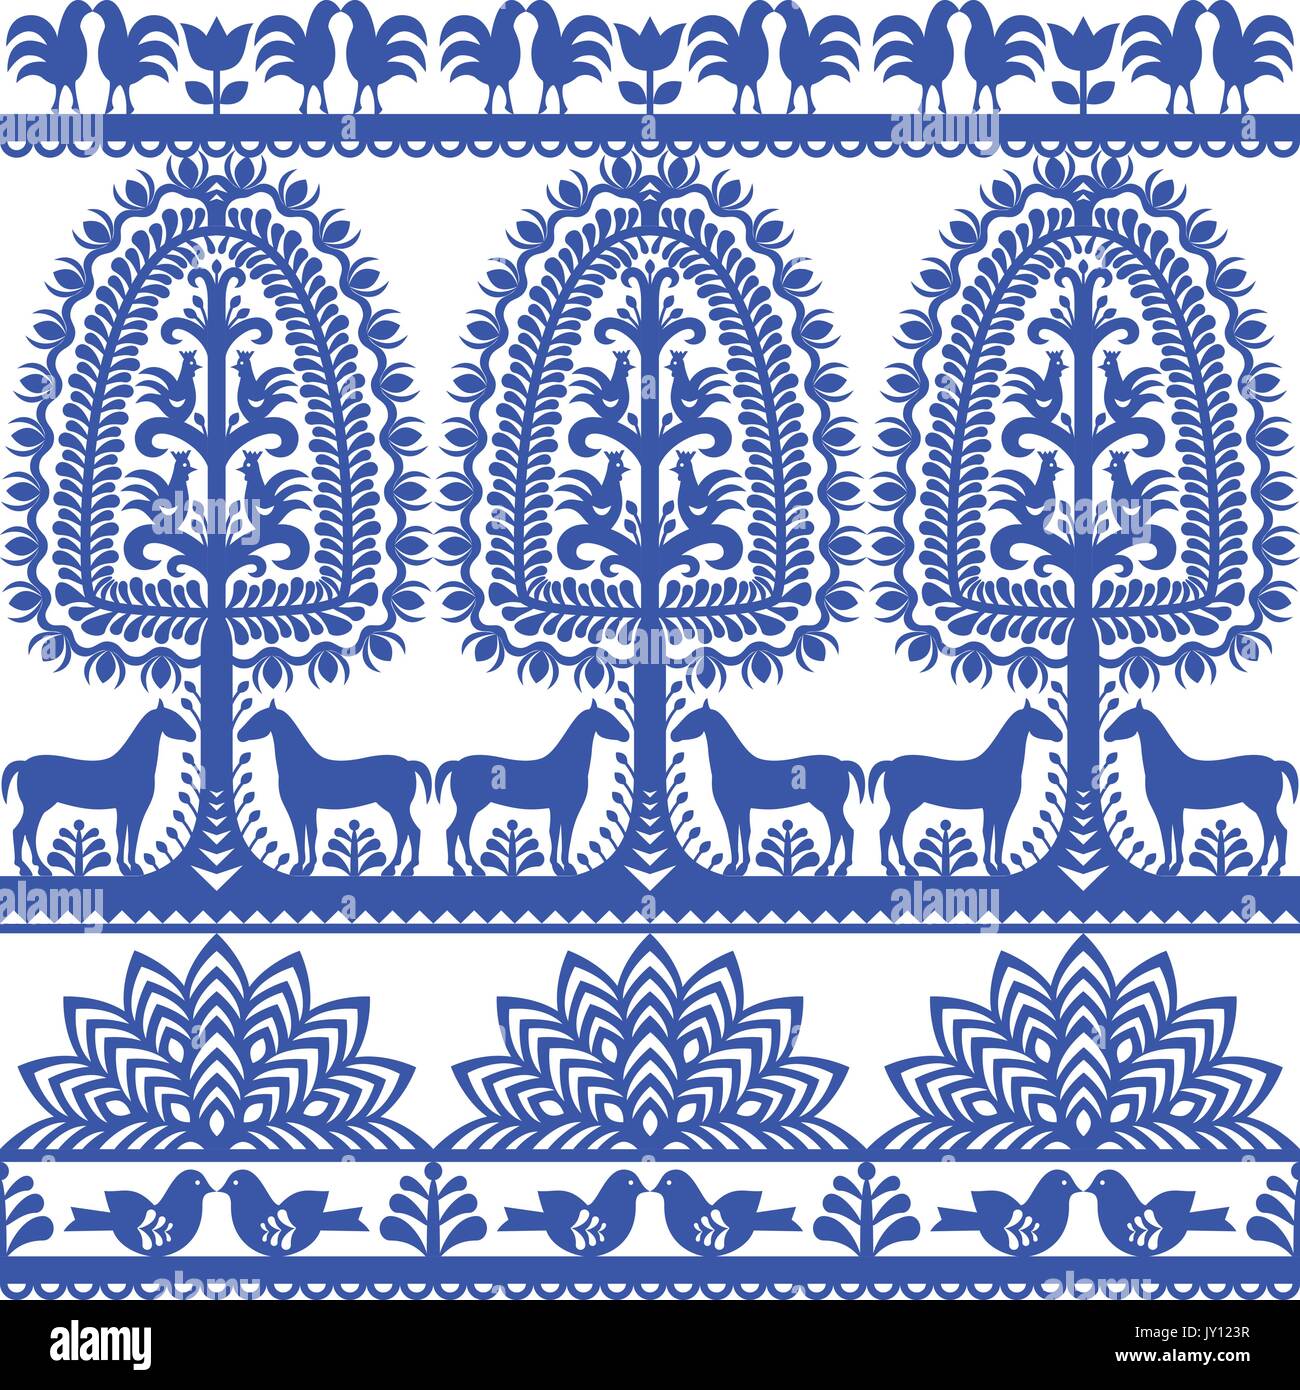 Seamless floral Polish folk art pattern Wycinanki Kurpiowskie - Kurpie Papercuts   Vector blue design of horse, tree and chickens - folk design from Stock Vector